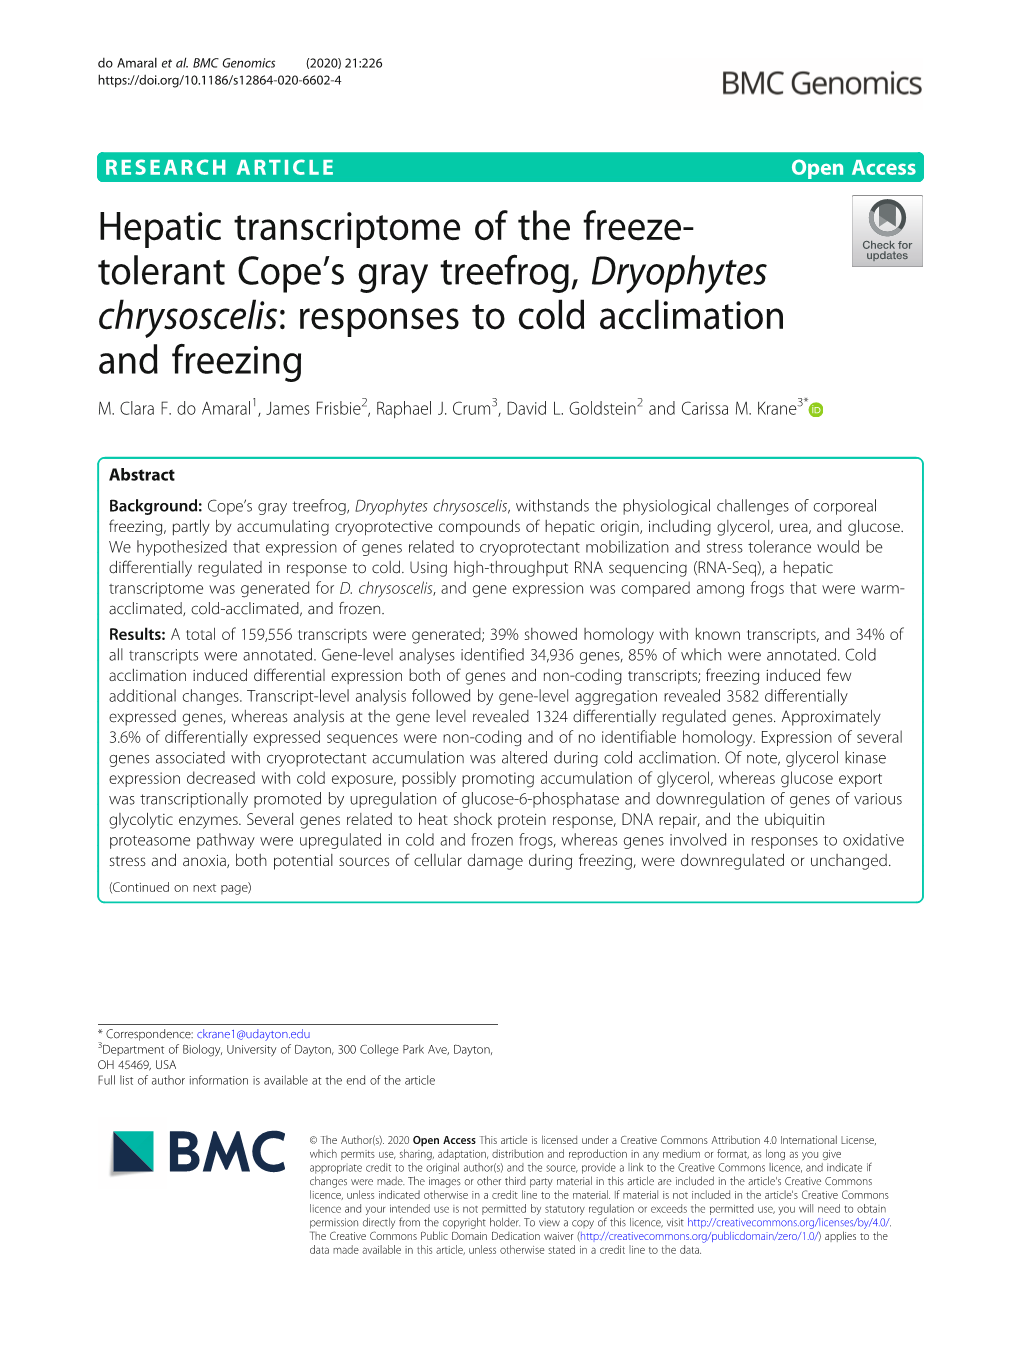 Hepatic Transcriptome of the Freeze-Tolerant